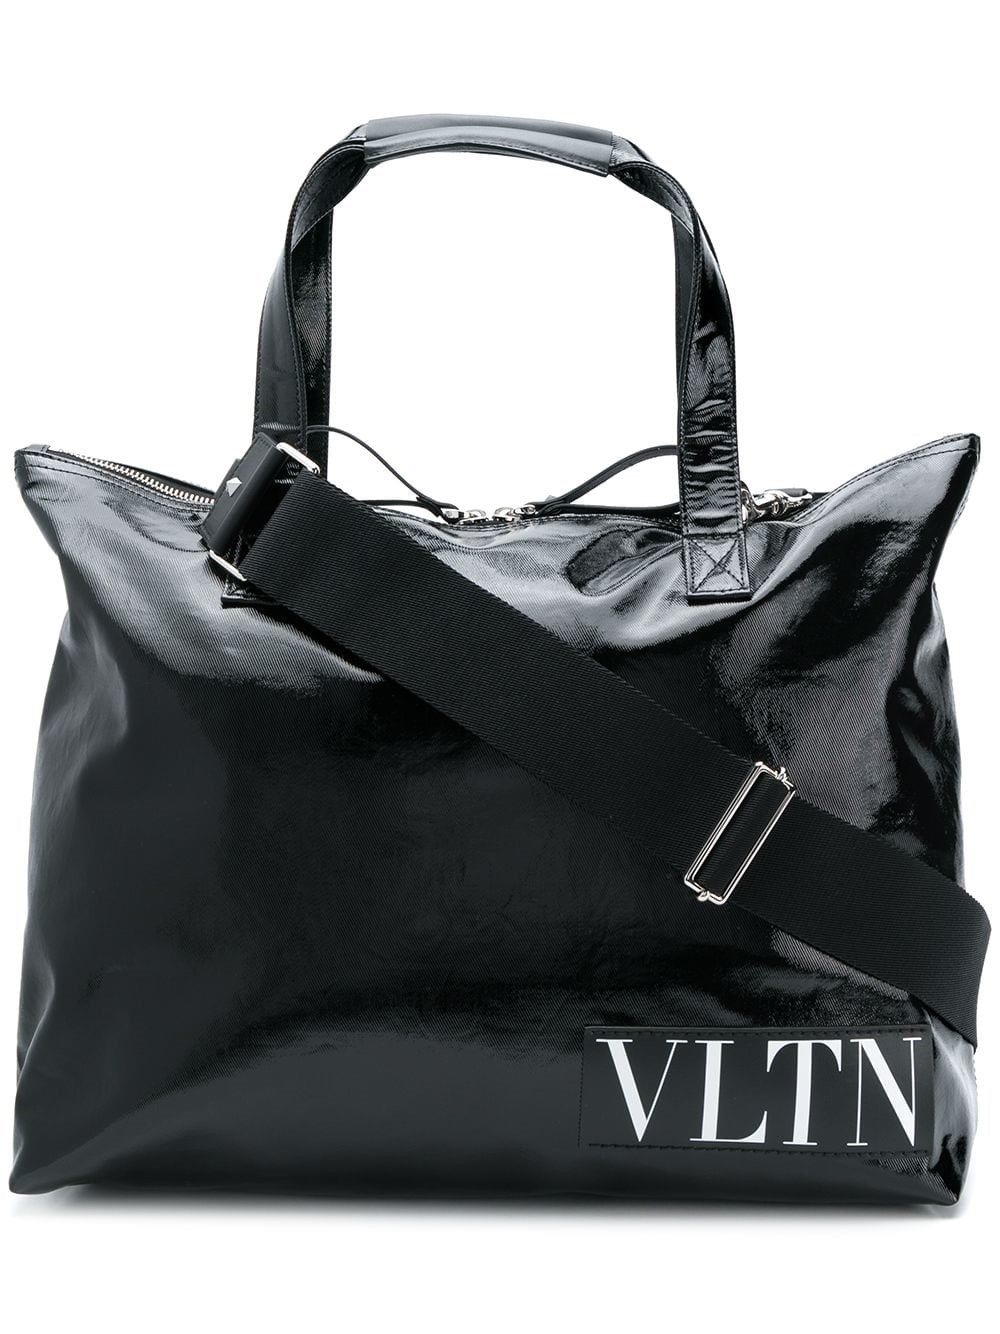 valentino garavani VLTN TOTE BAG available on montiboutique.com - 25606